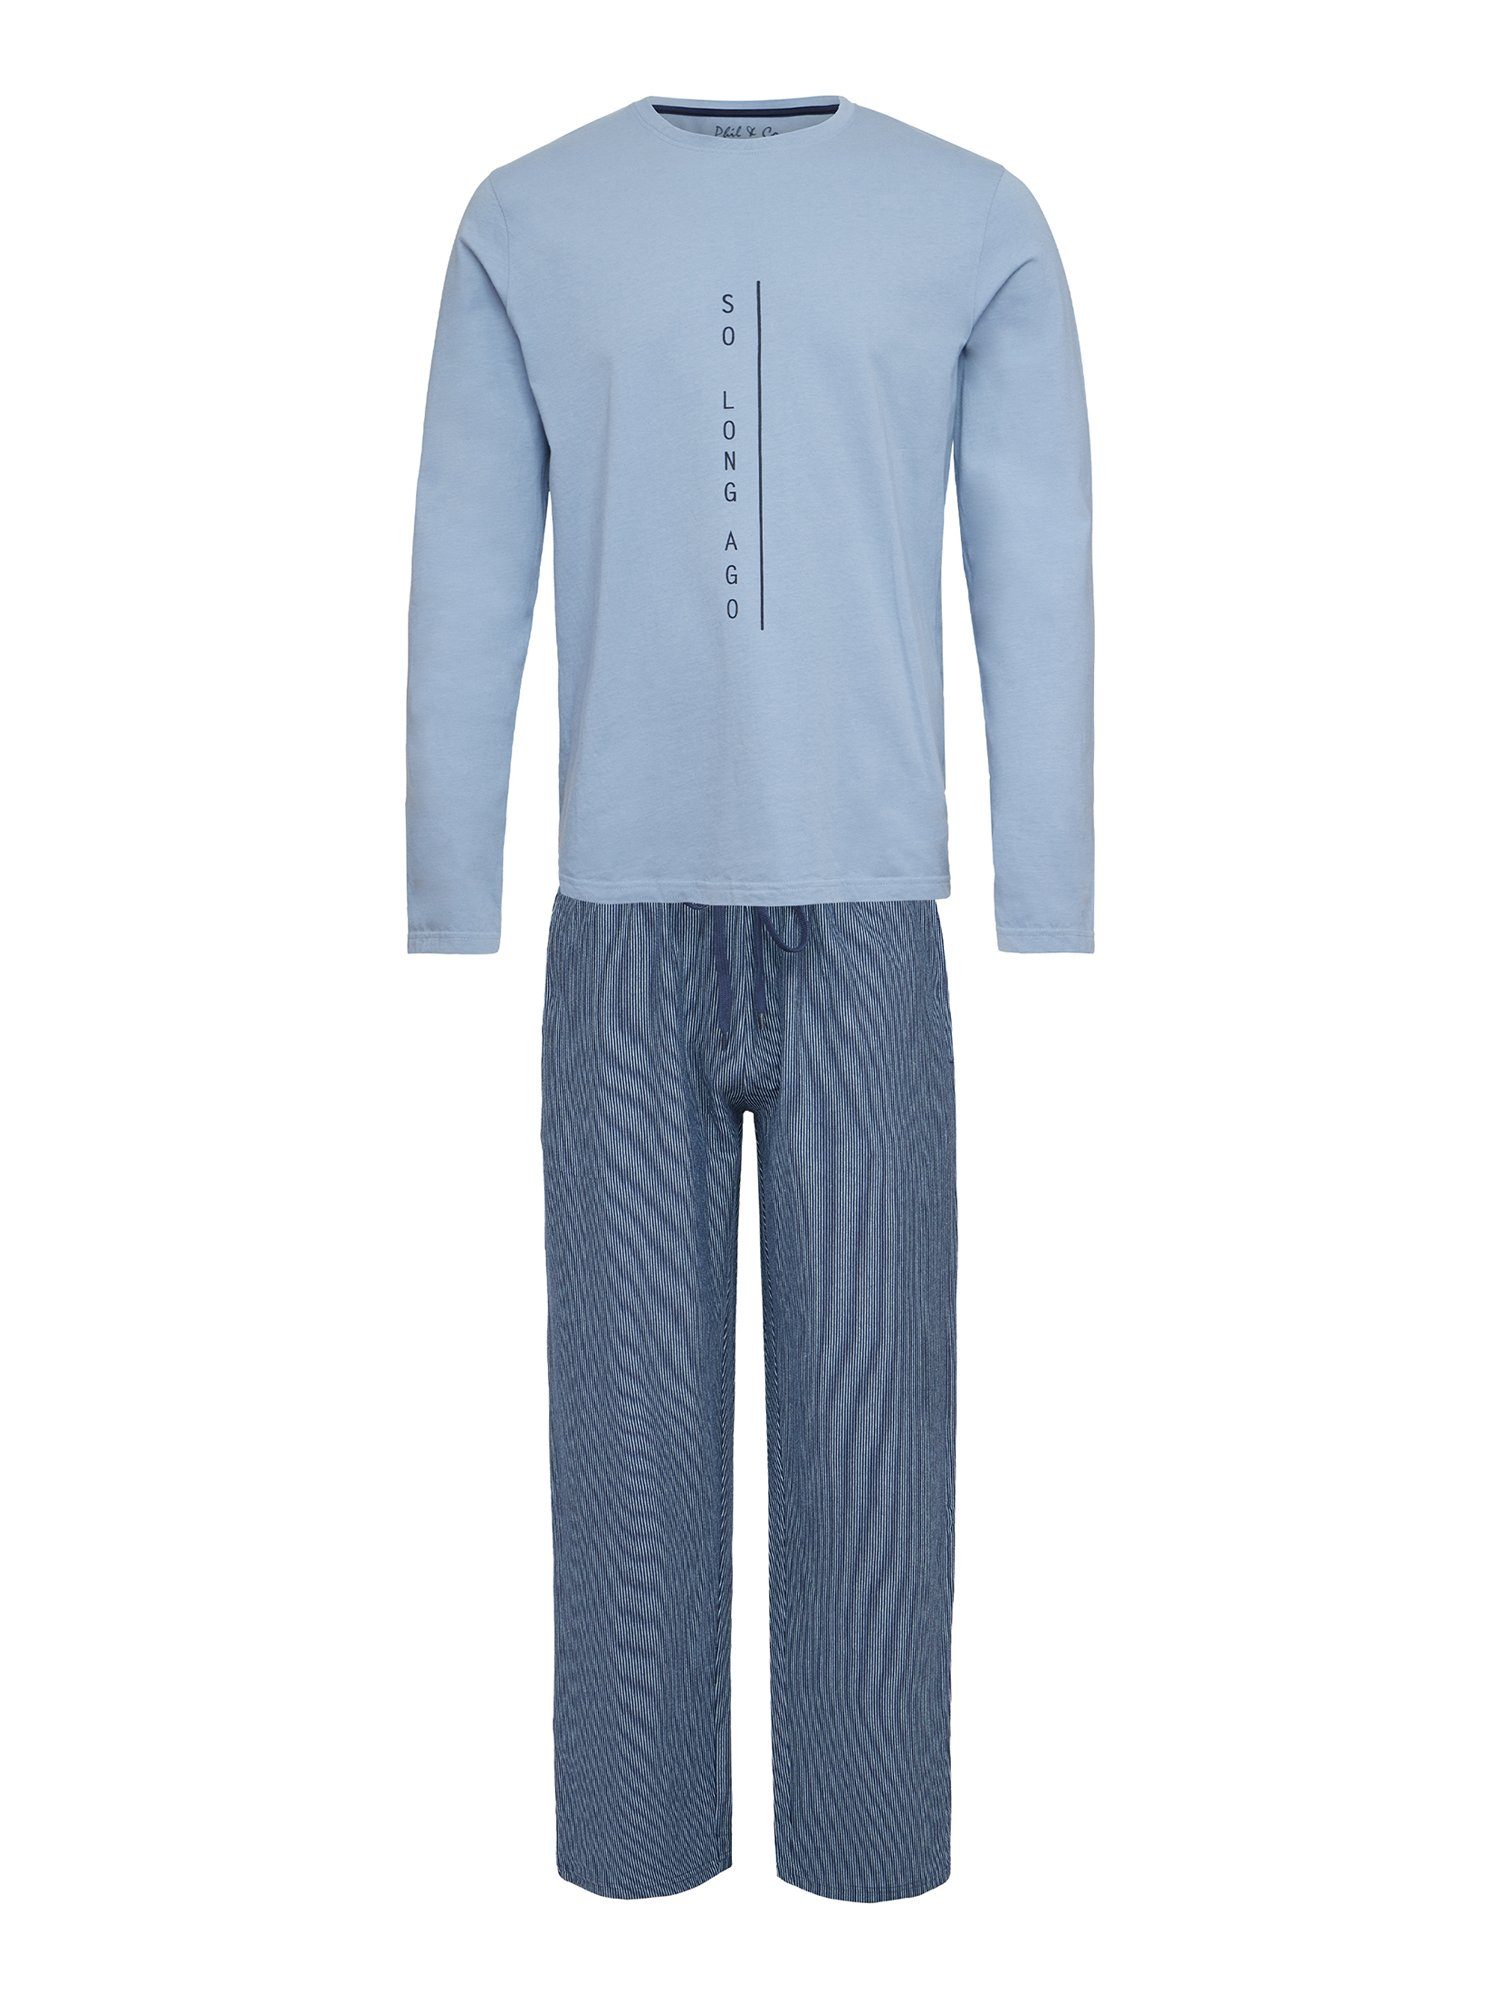 hellblau-nadelstreifen Co. schlafmode Special bequem tlg) Pyjama schlafanzug & (2 Phil